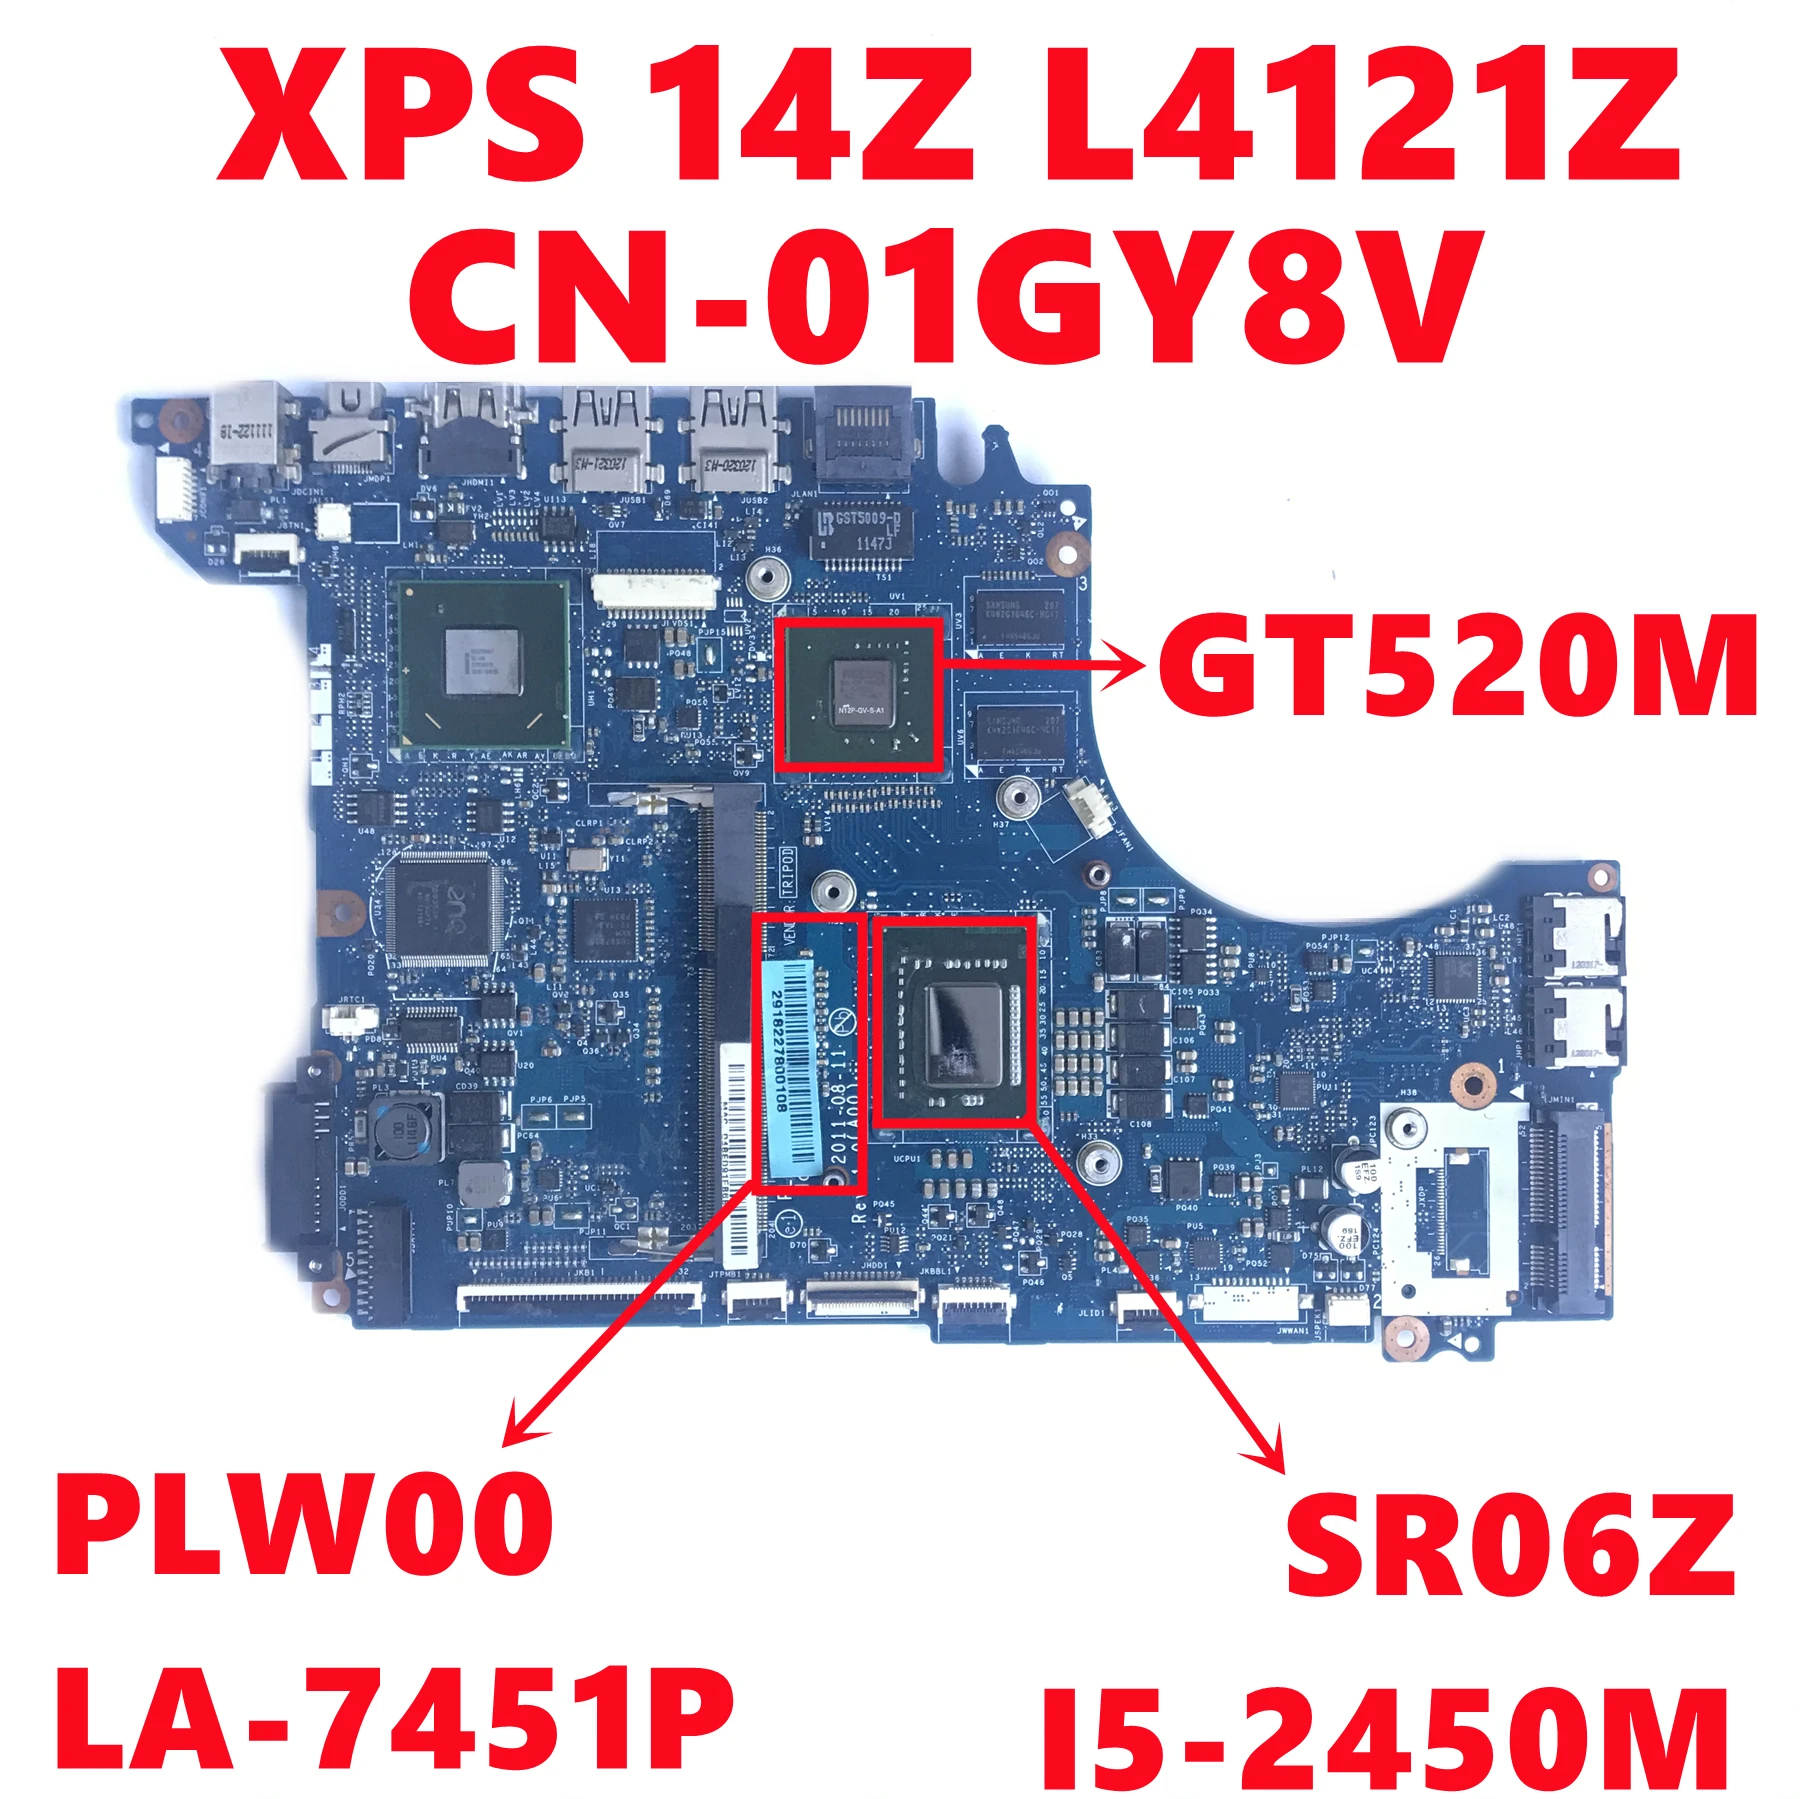 

CN-01GY8V 01GY8V 1GY8V For Dell XPS 14Z L4121Z Laptop Motherboard PLW00 LA-7451P W/ SR06Z I5-2450M N12P-GV-S-A1 Fully Tested OK